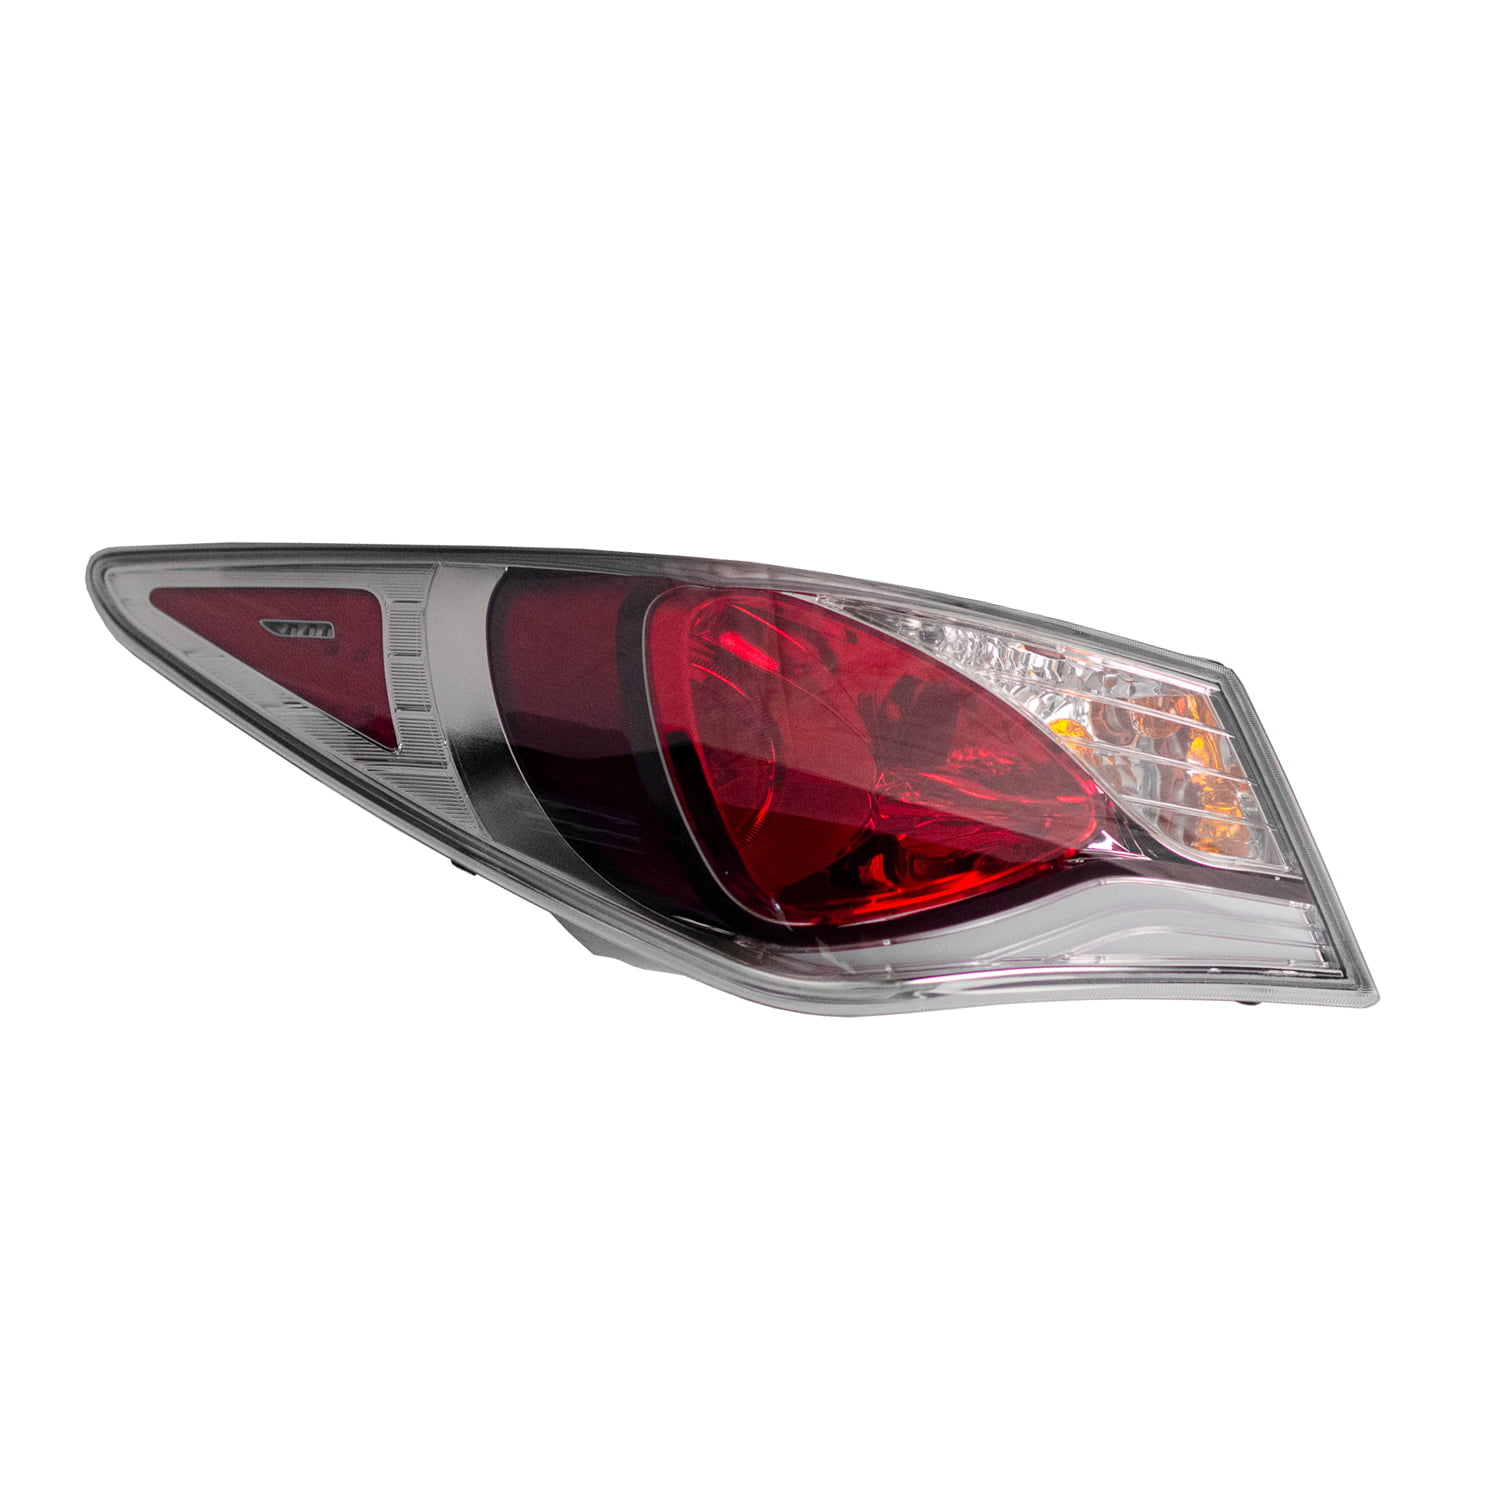 Rear Left Driver Bumper Reflector Replacement Lamp For 11 12 13 Hyundai Sonata 